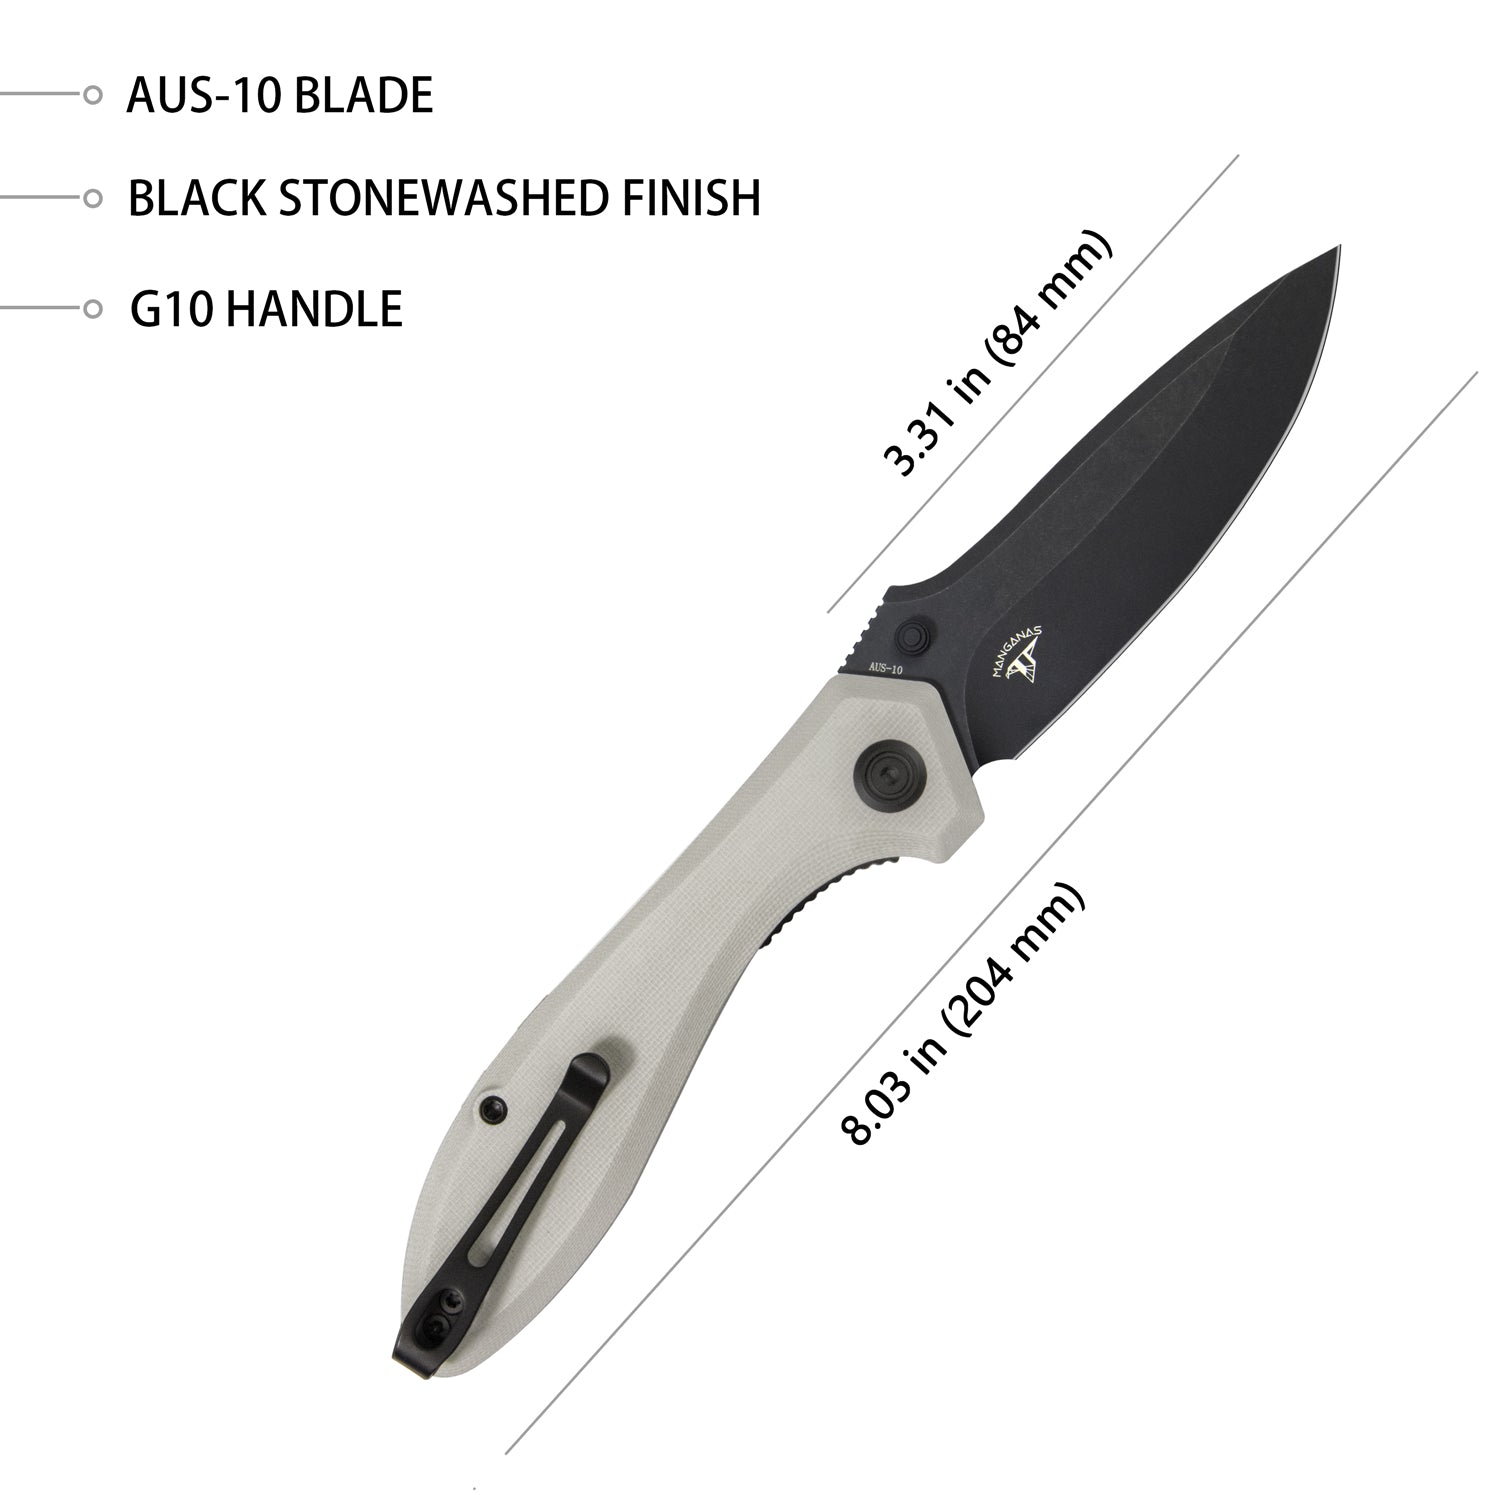 Kubey Ruckus Klappmesser Liner Lock Folding Knife Ivory G10 Handle 3.31" Dark Stonewashed AUS-10 KU314D（复制）